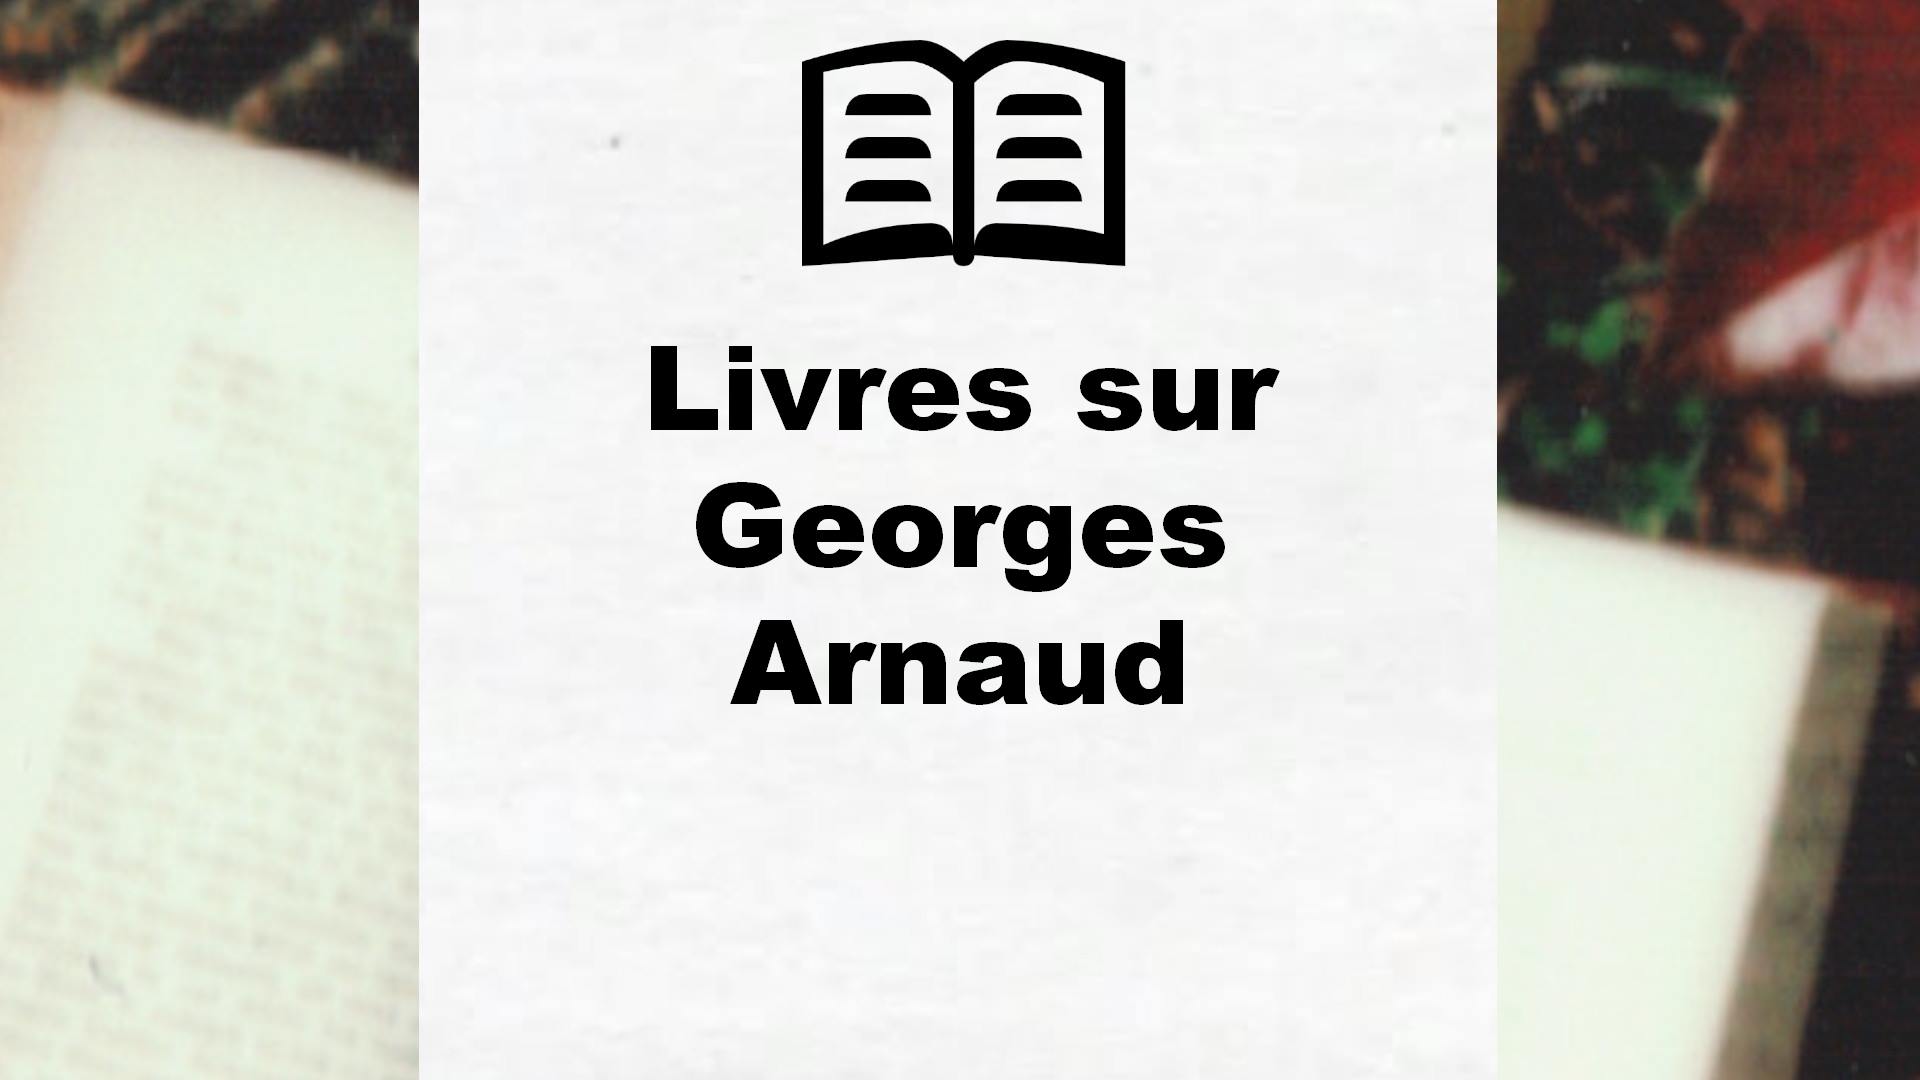 Livres sur Georges Arnaud